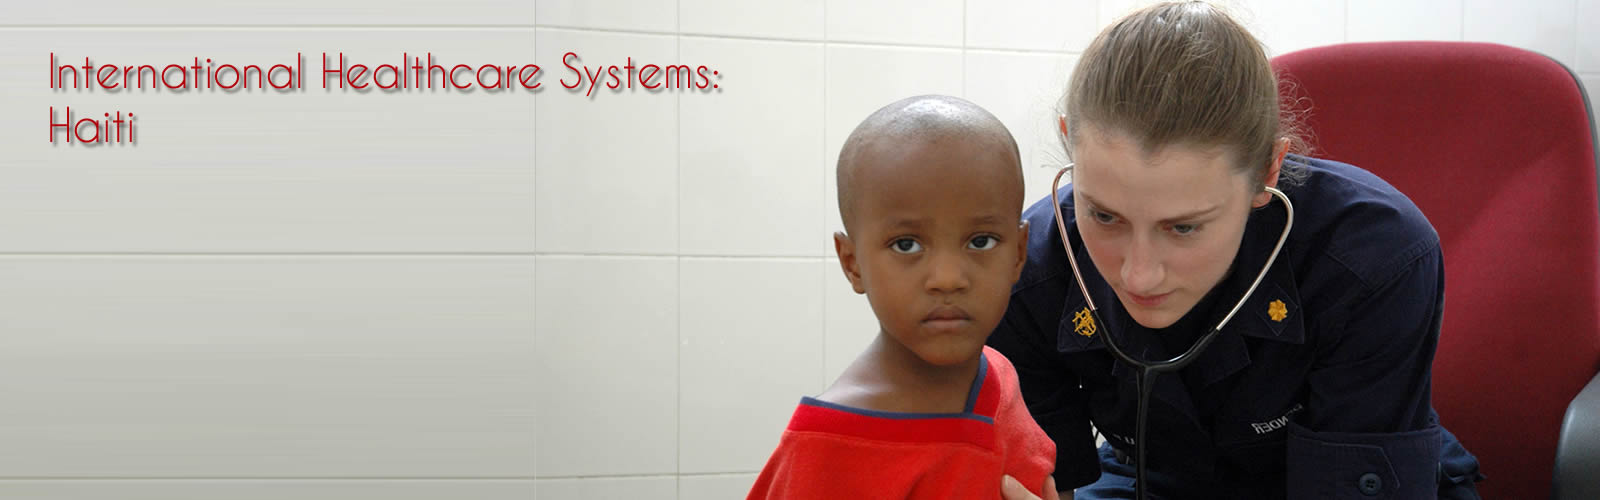 International Healthcare Systems: Haiti